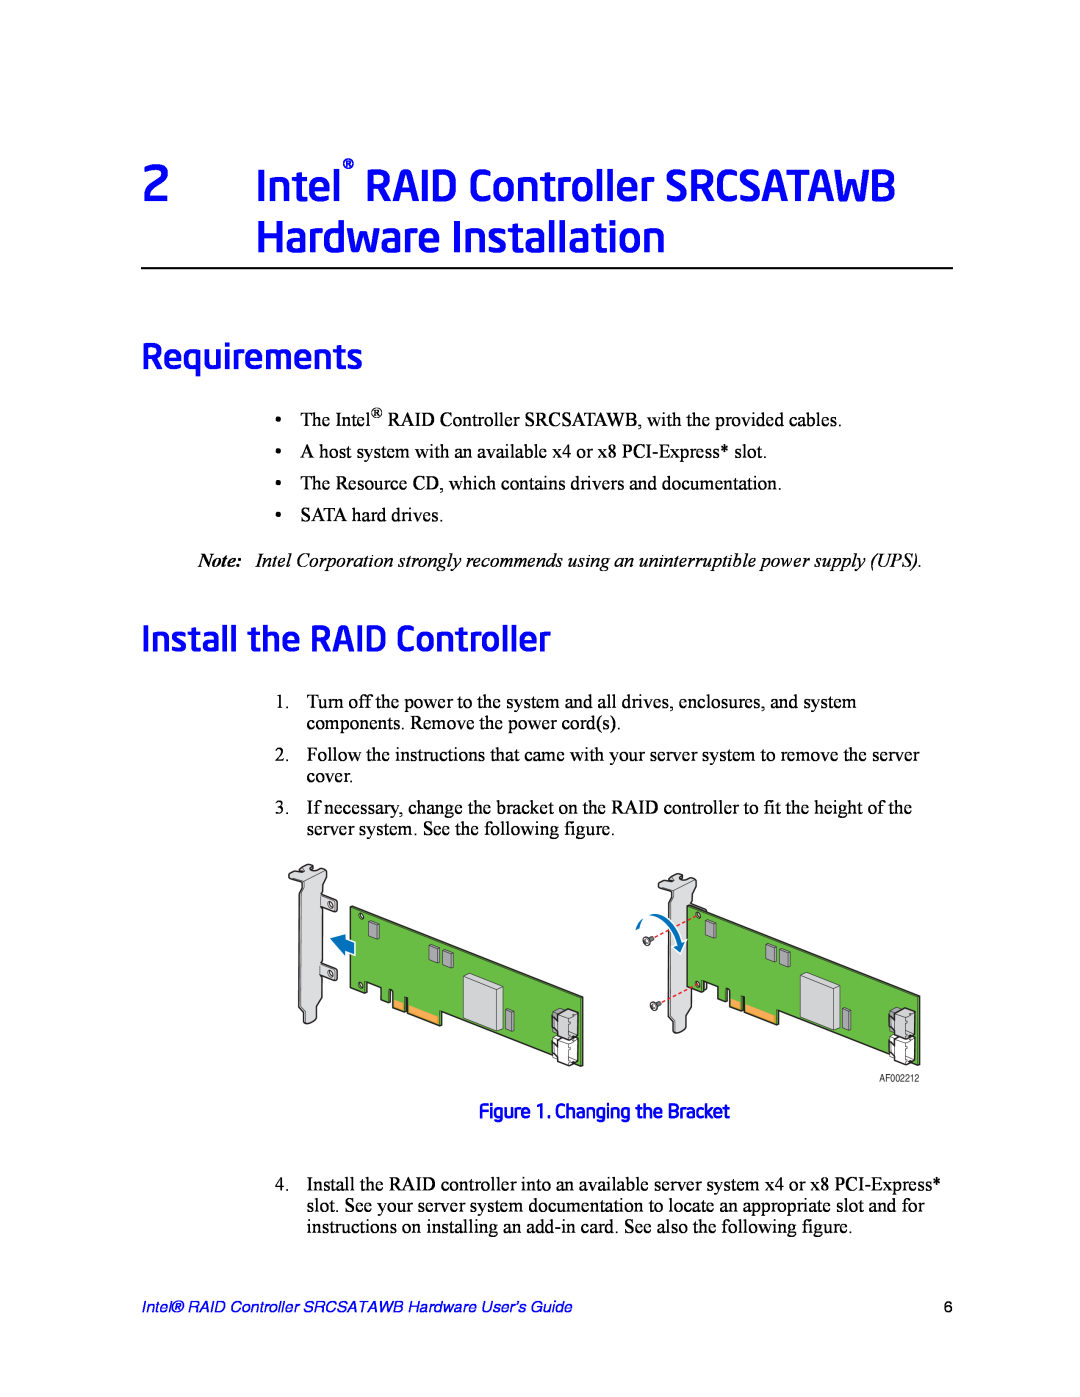 Intel SRCSATAWB manual Requirements, Install the RAID Controller, Changing the Bracket 